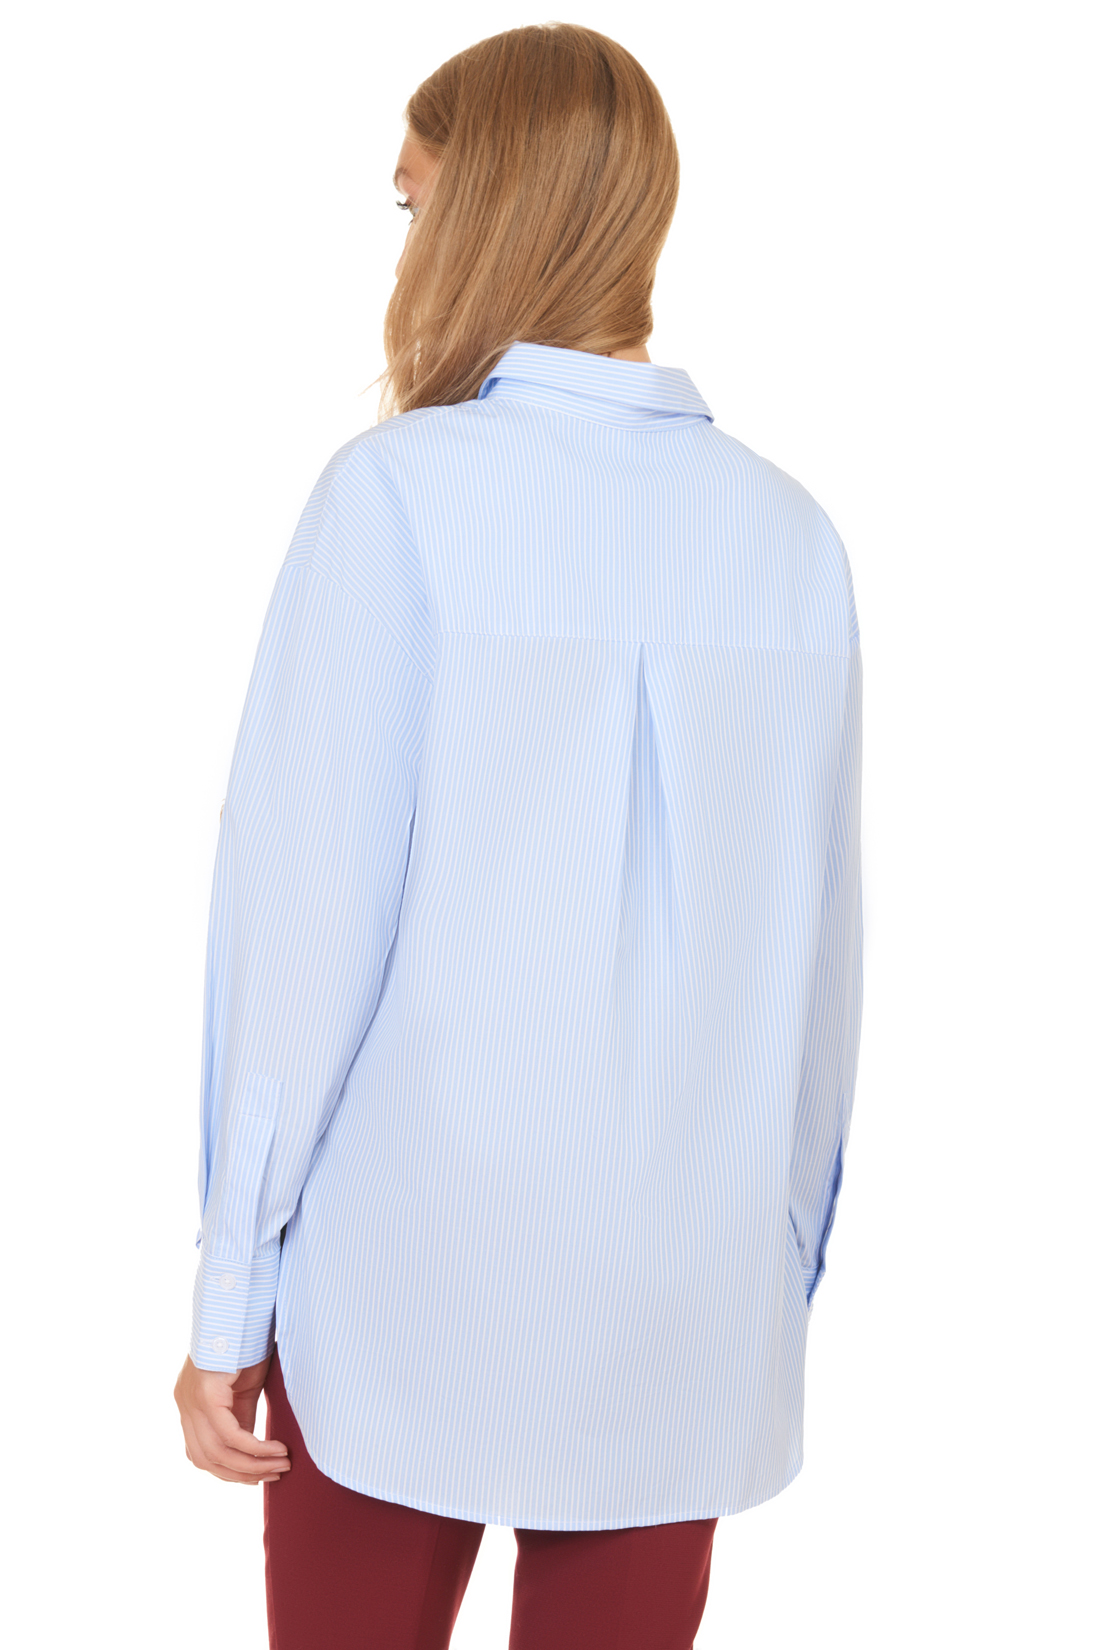 Прямая рубашка в полоску (арт. baon B177516), размер L, цвет белый Прямая рубашка в полоску (арт. baon B177516) - фото 2